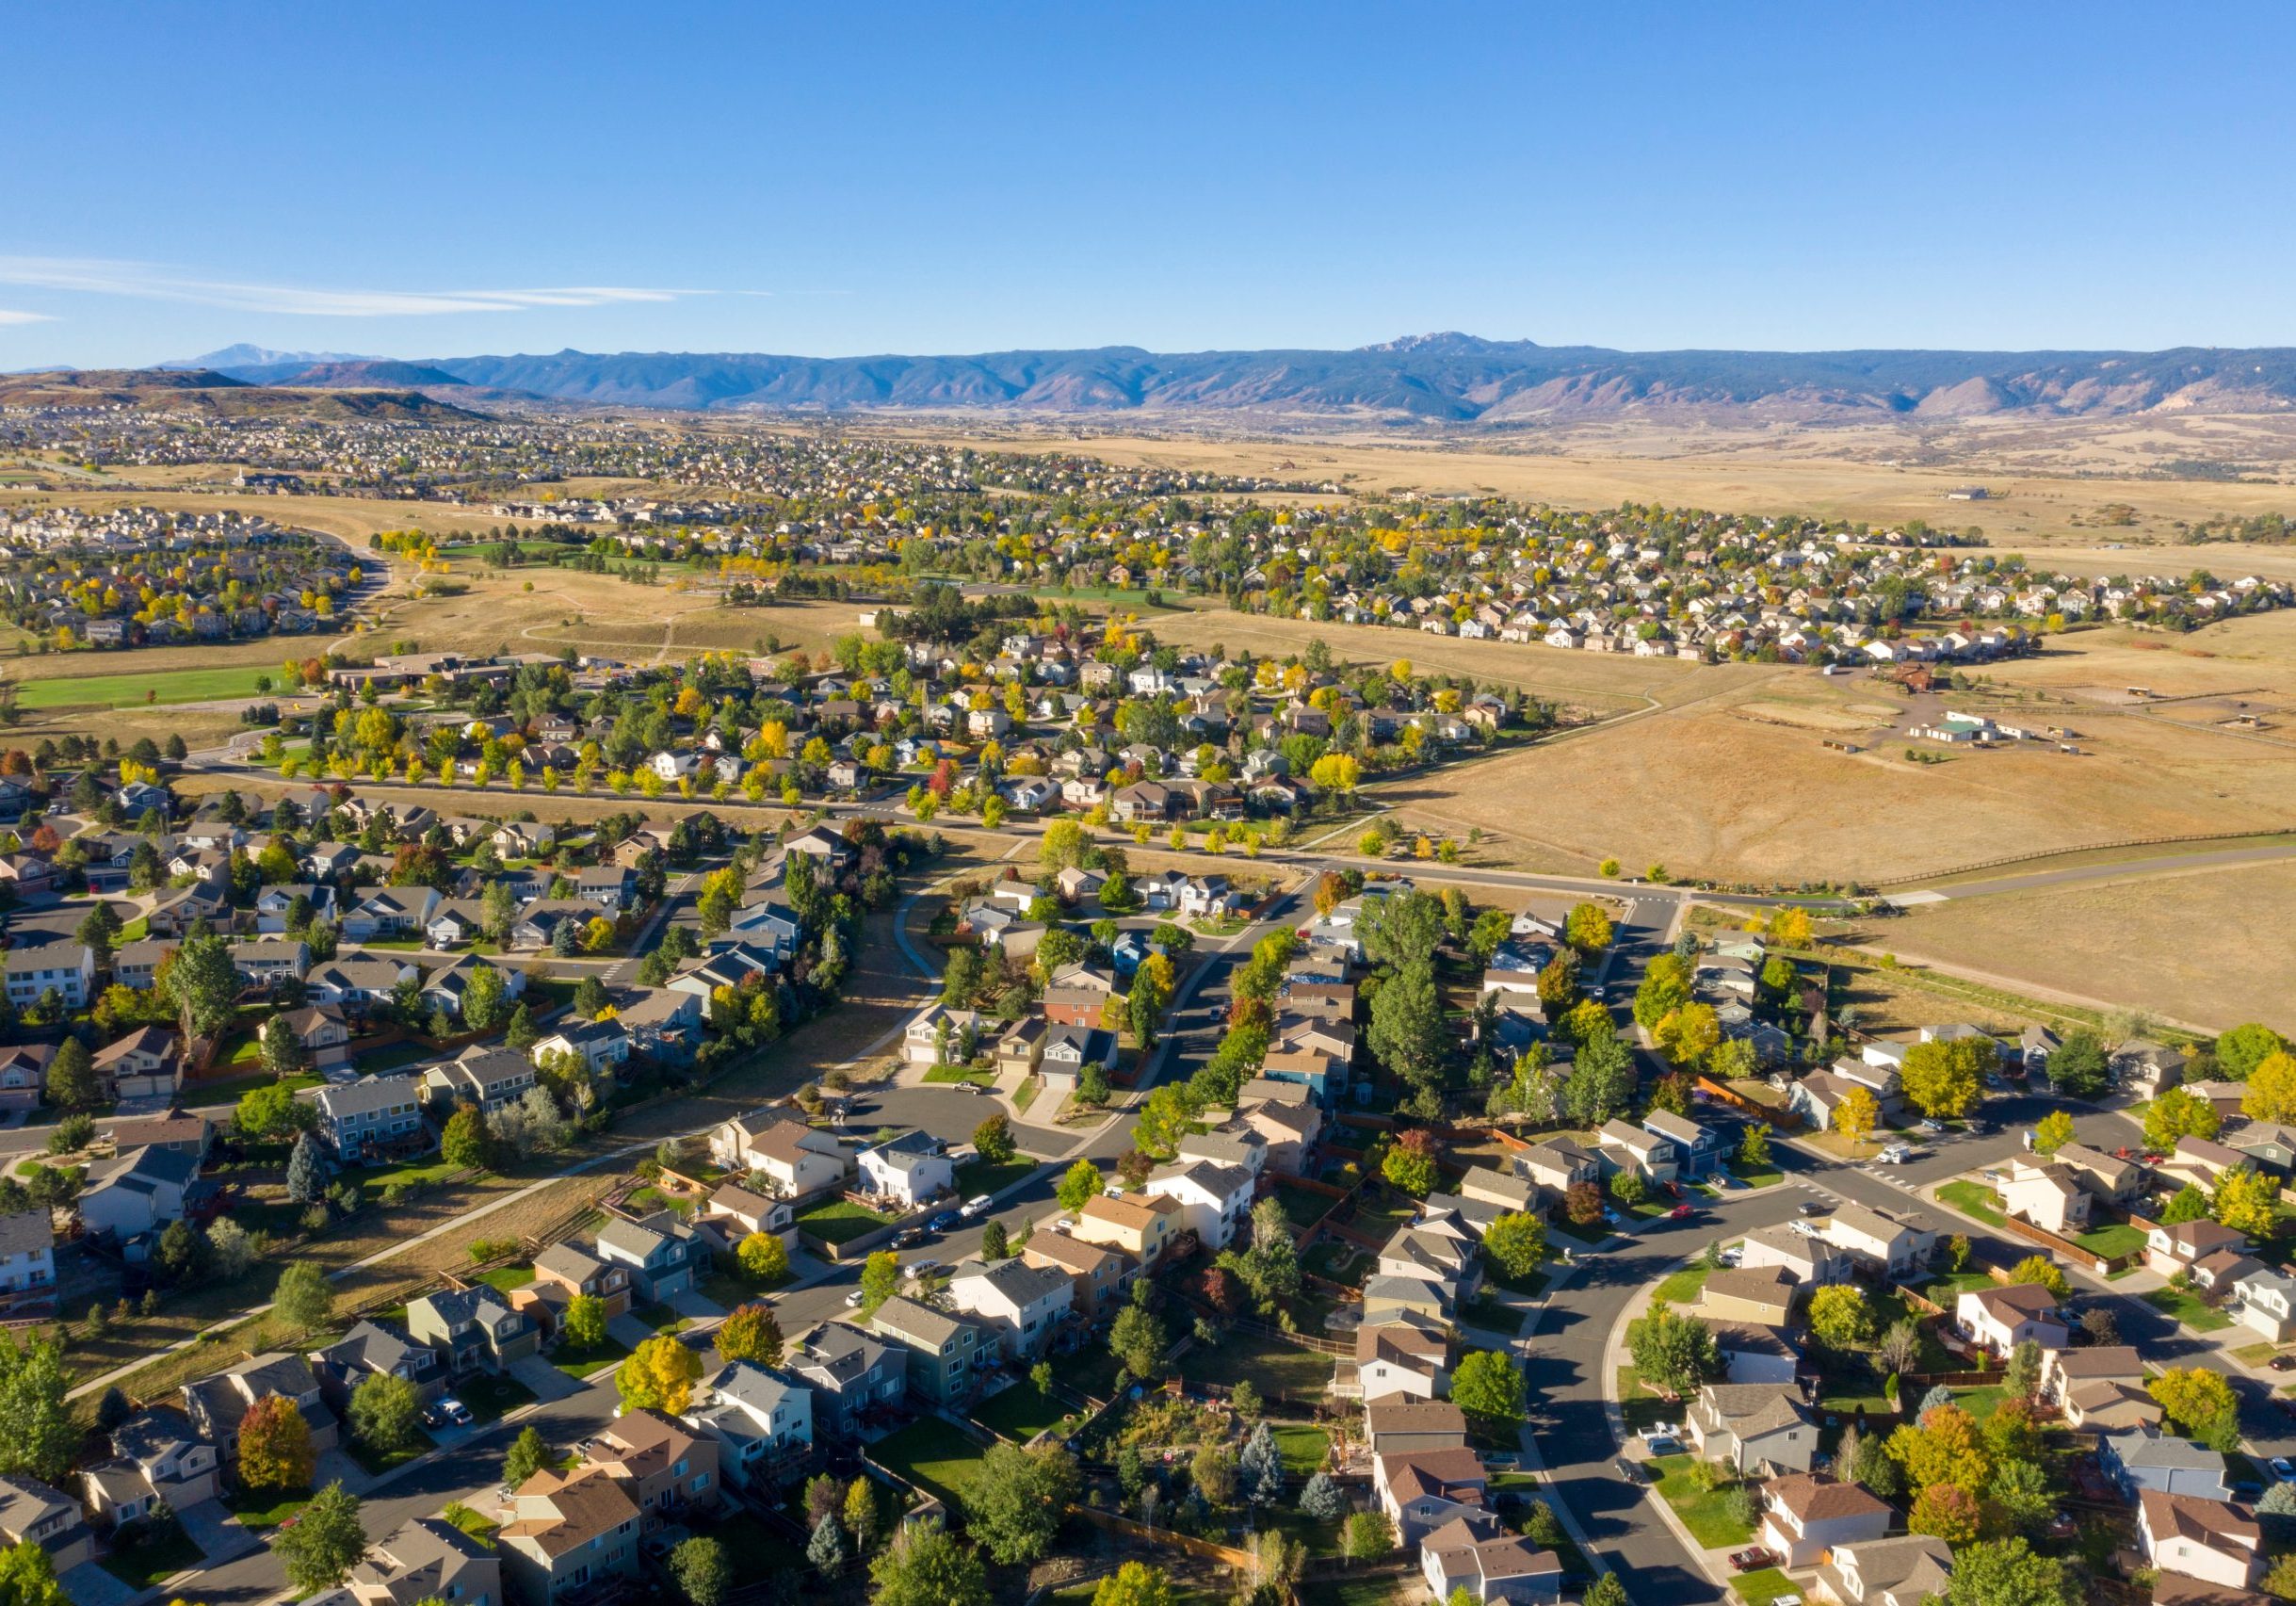 Small Town and Suburban Sprawl In Colorado